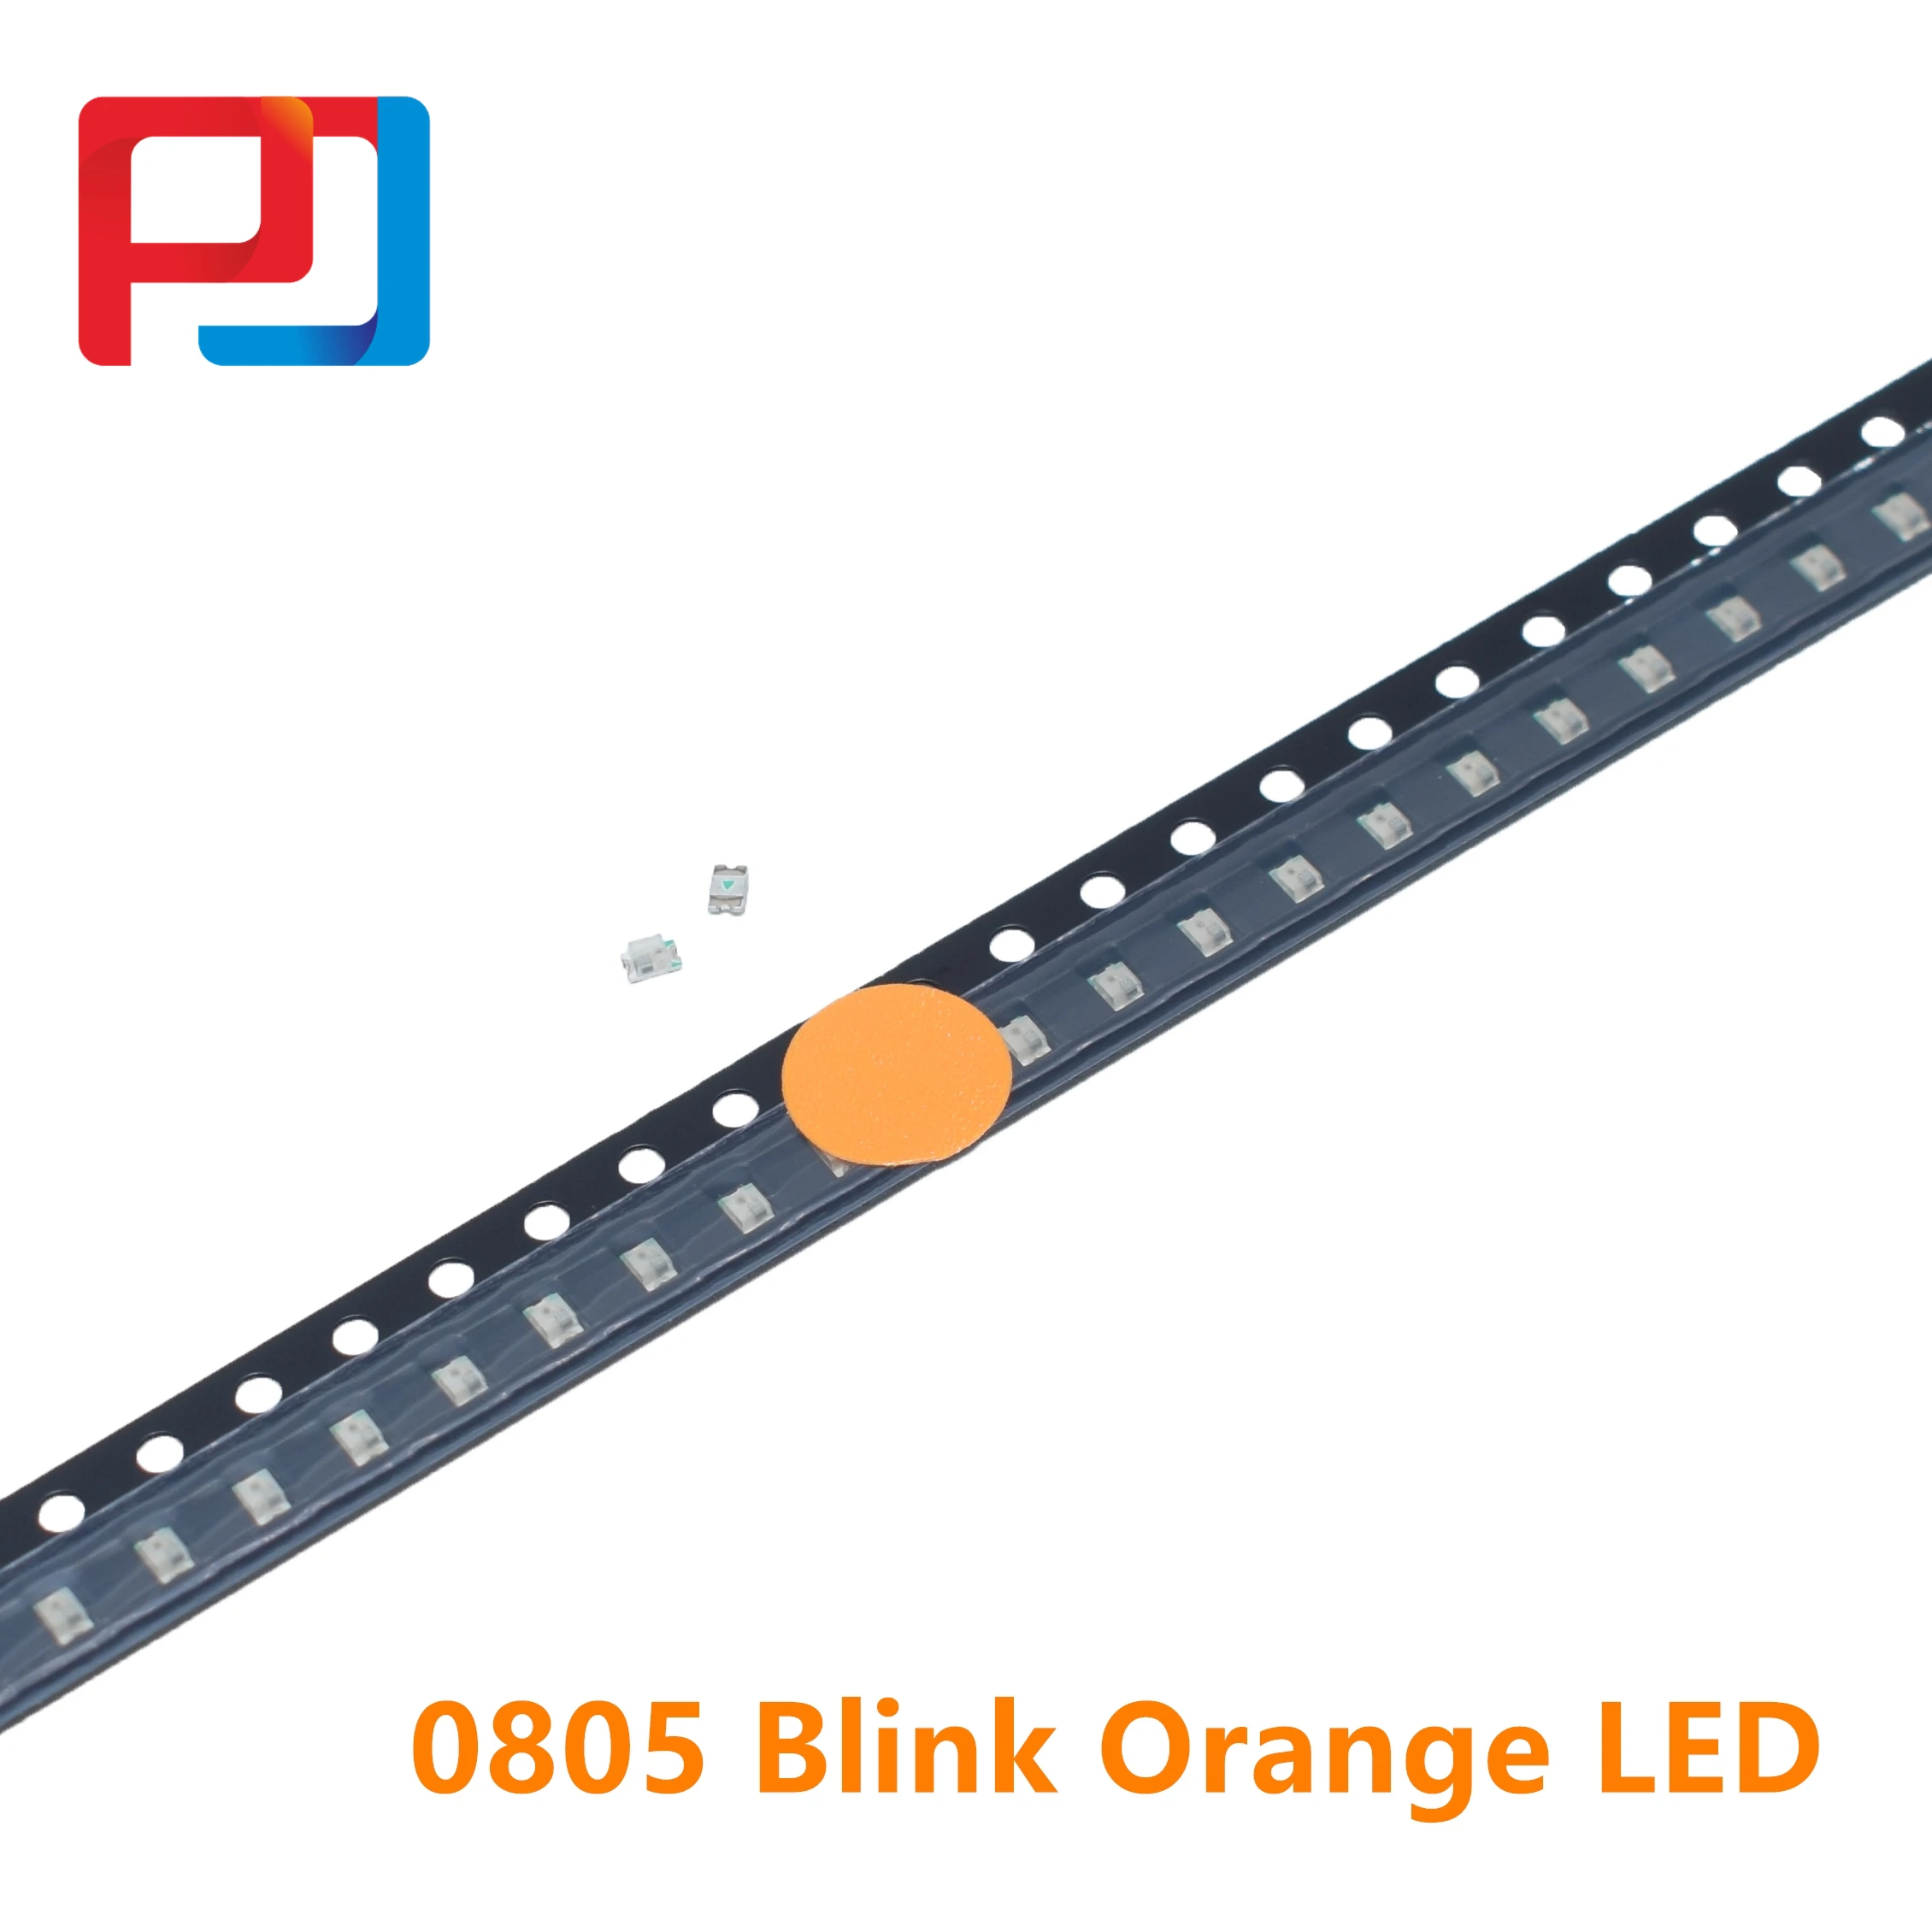 SMD Blink LED 0805 Orange destellante Flash luz parpadeante modellbau 10 trozo 